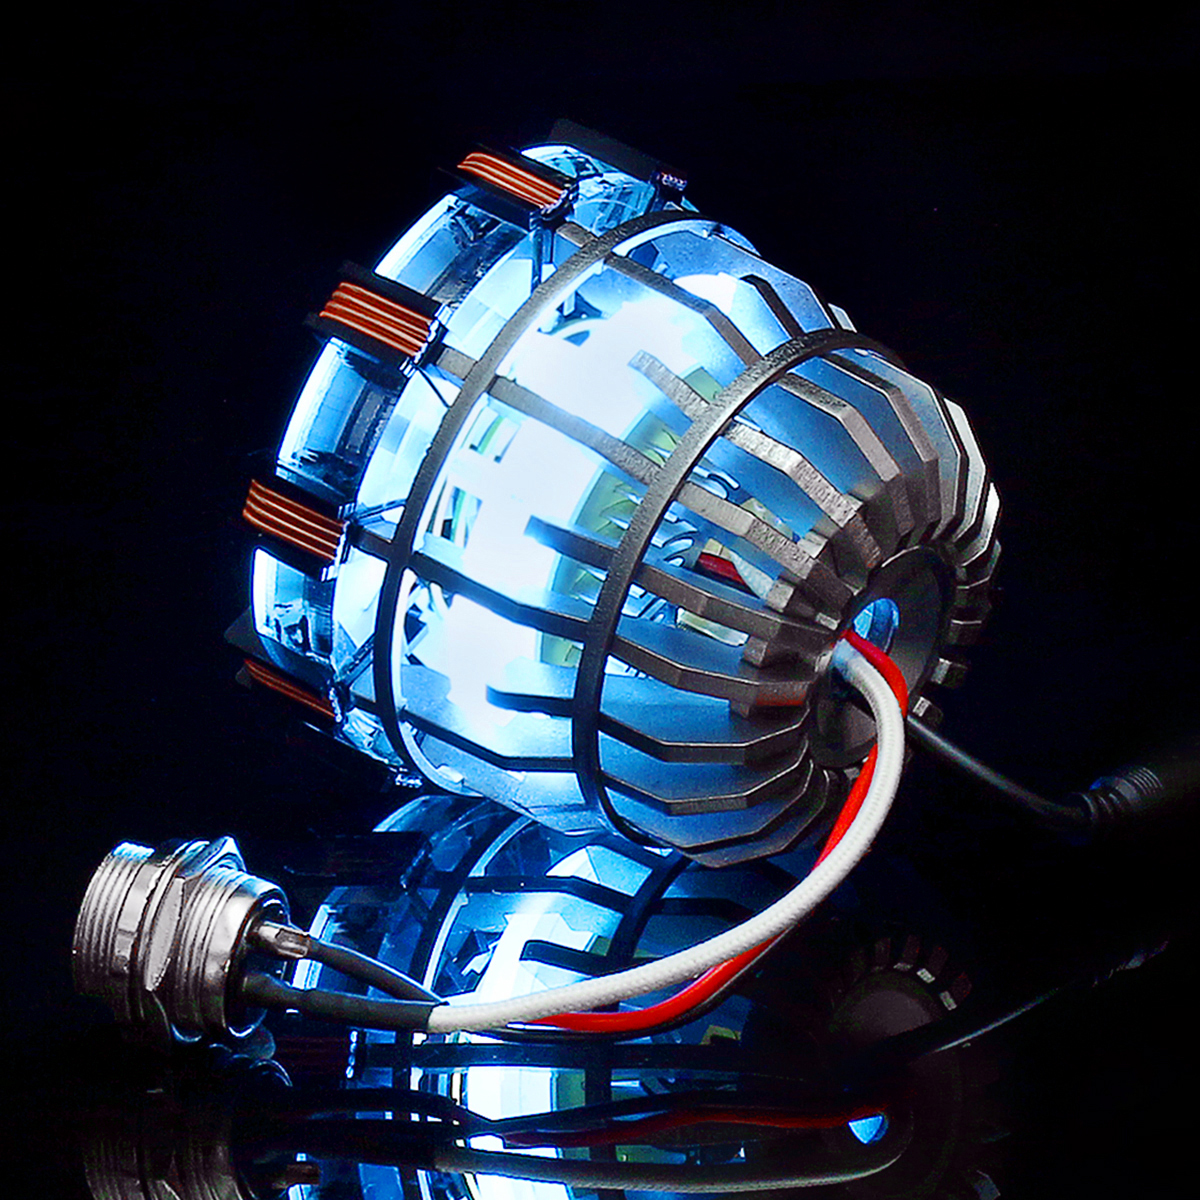 MK2 Tony DIY Arc Reactor Lamp Stainless Steel Kit Illuminant LED Flash Light Set 20